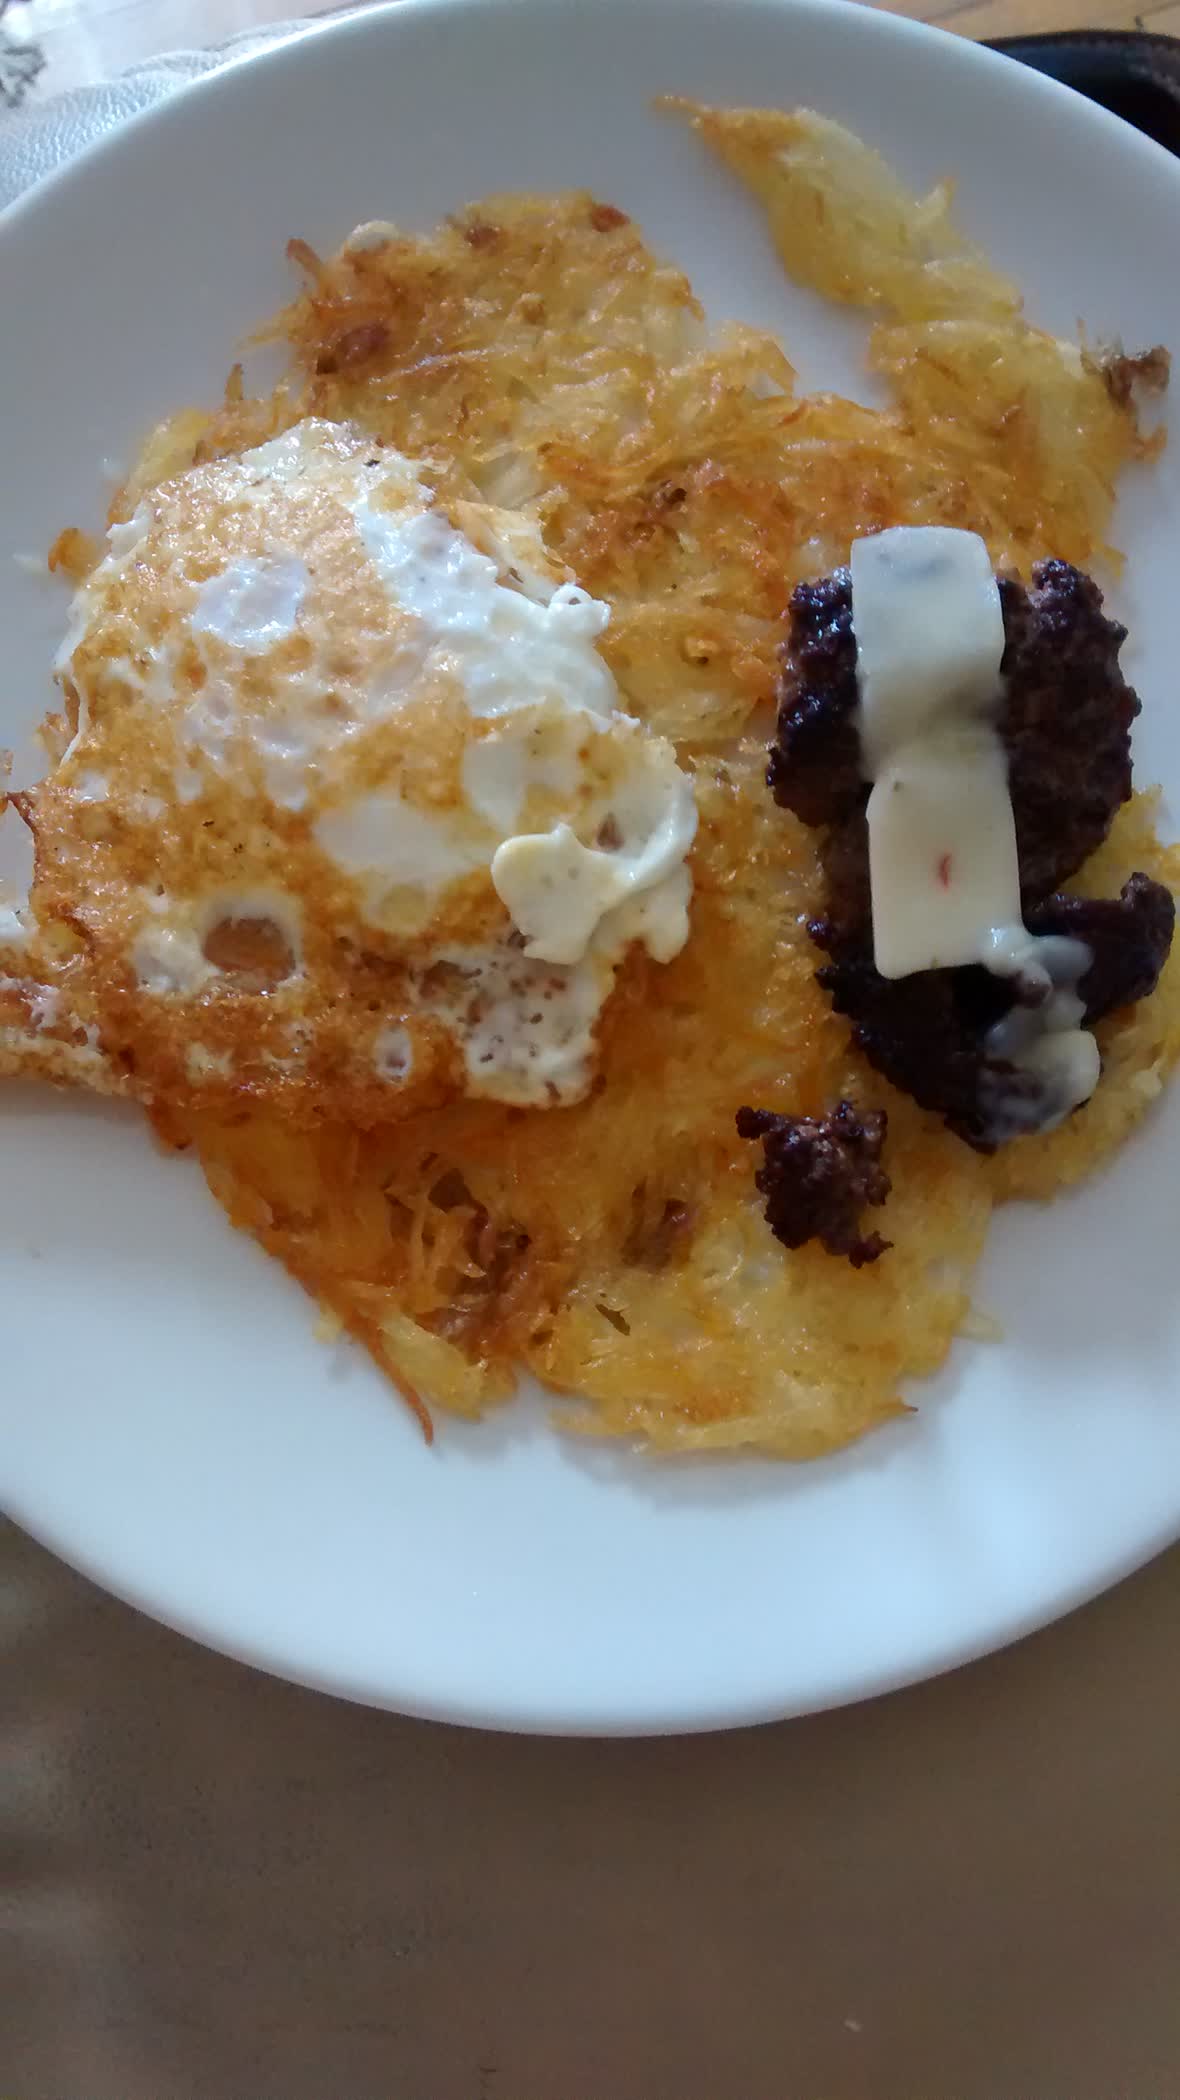  Rosti, fried egg, cheese, and chorizo.